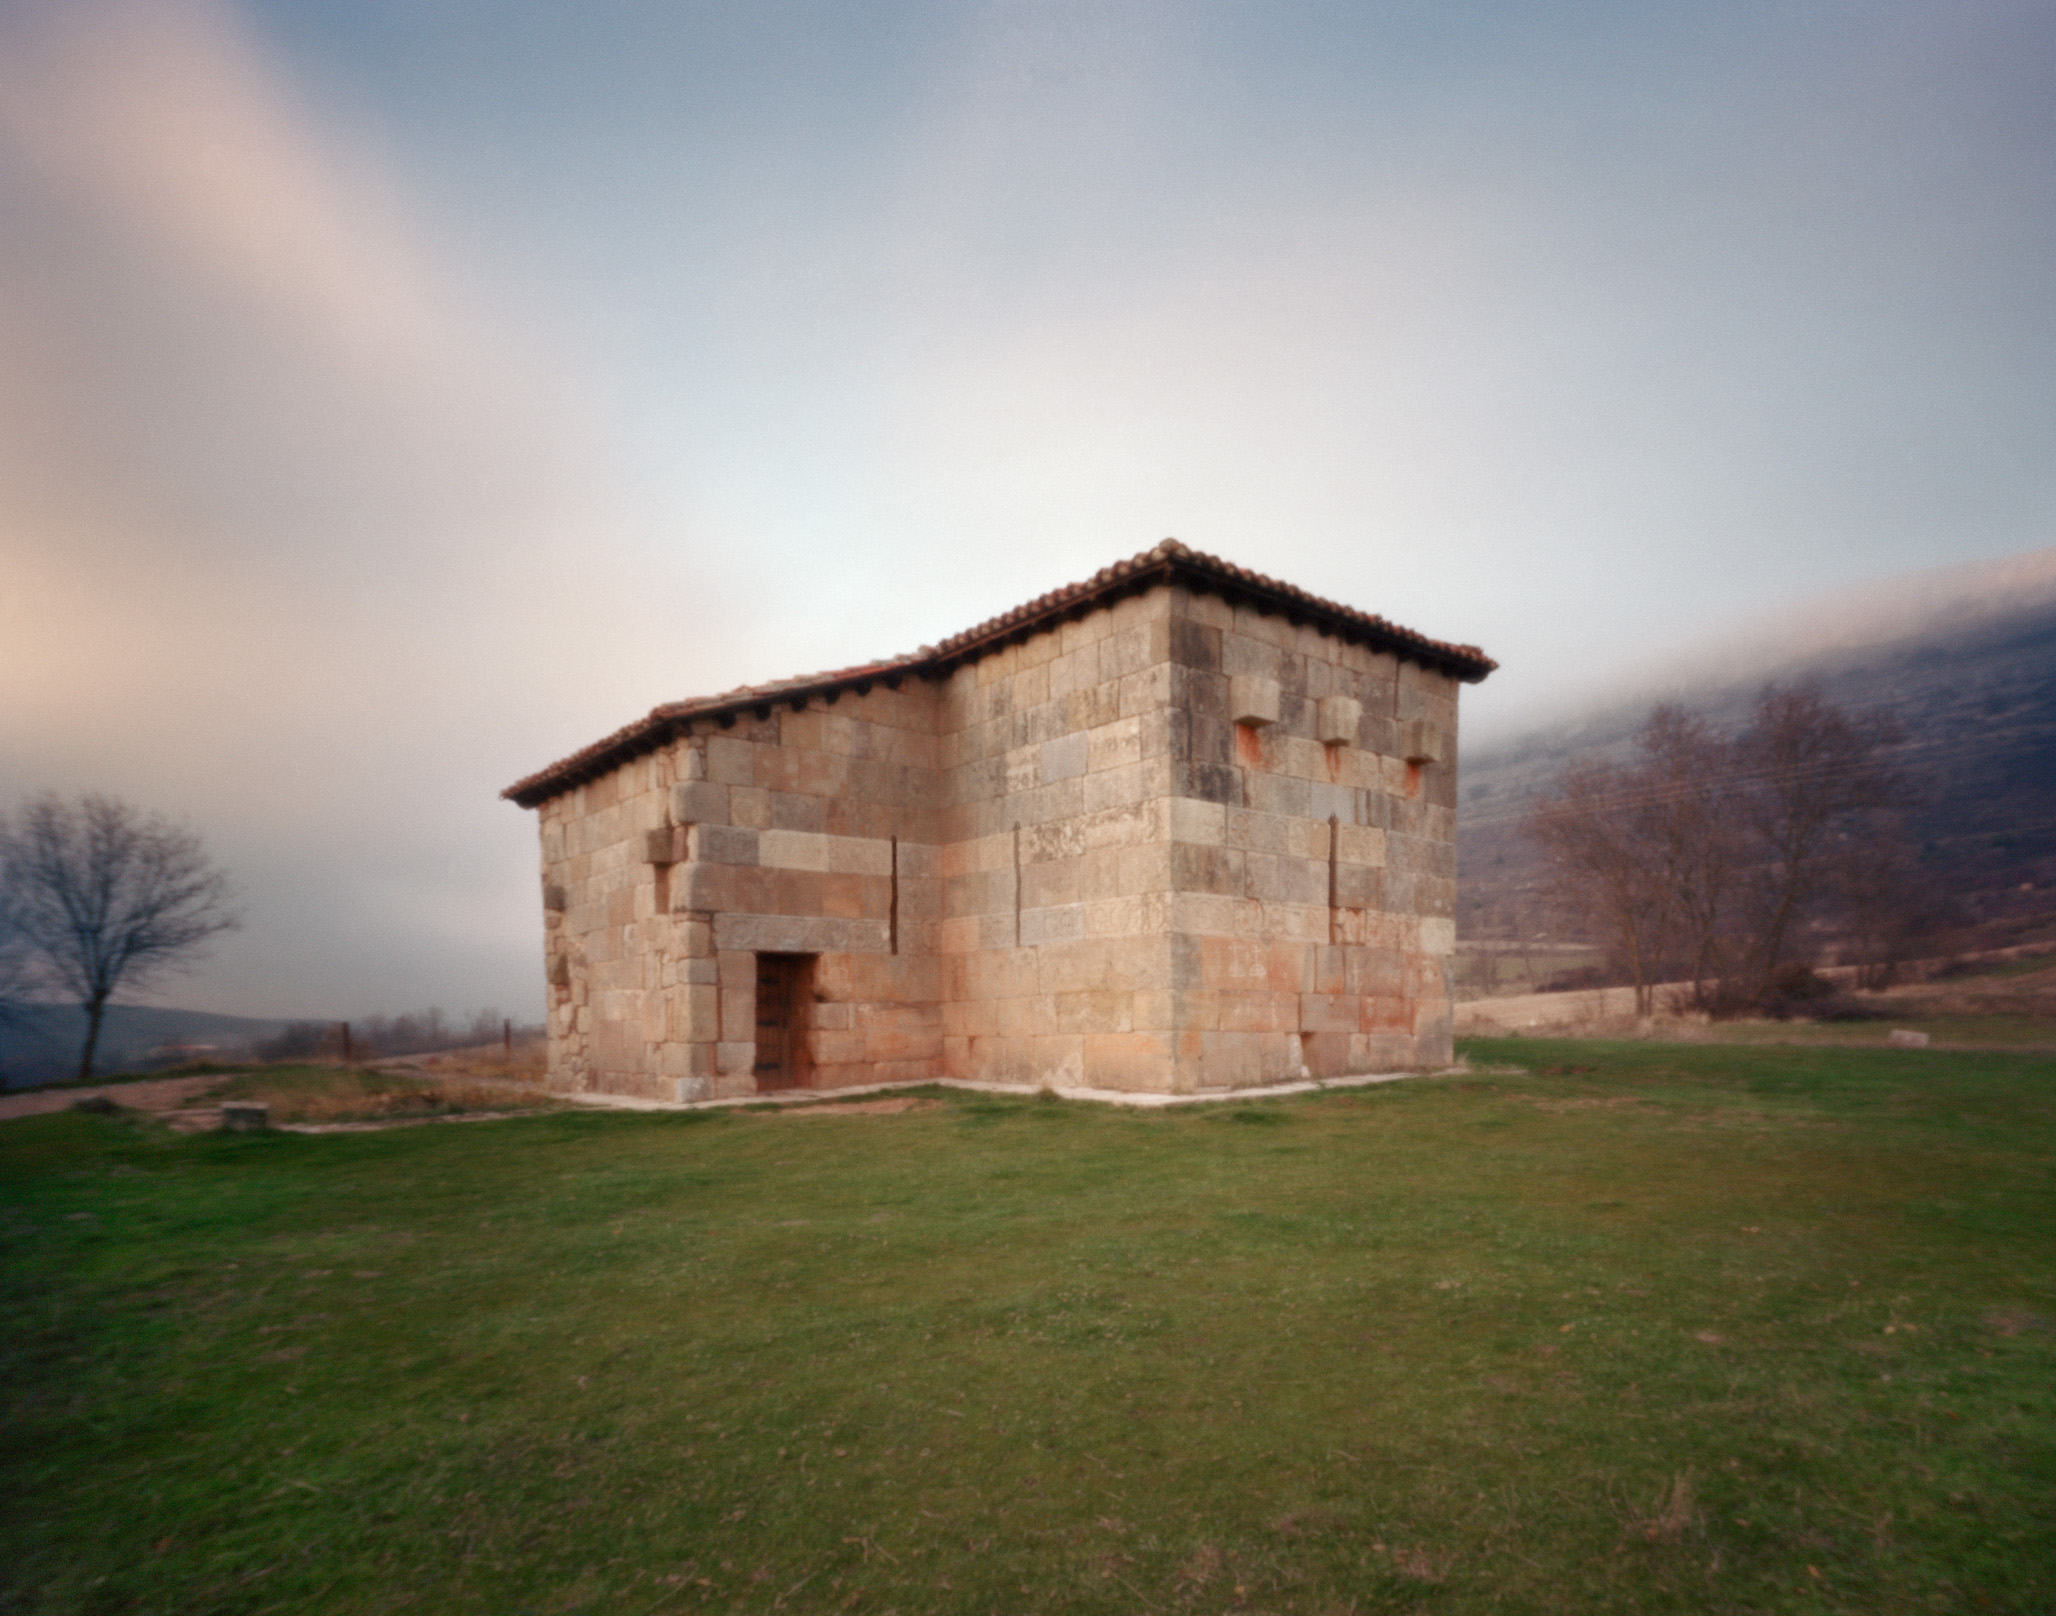 Visigoth hermitage in Spain